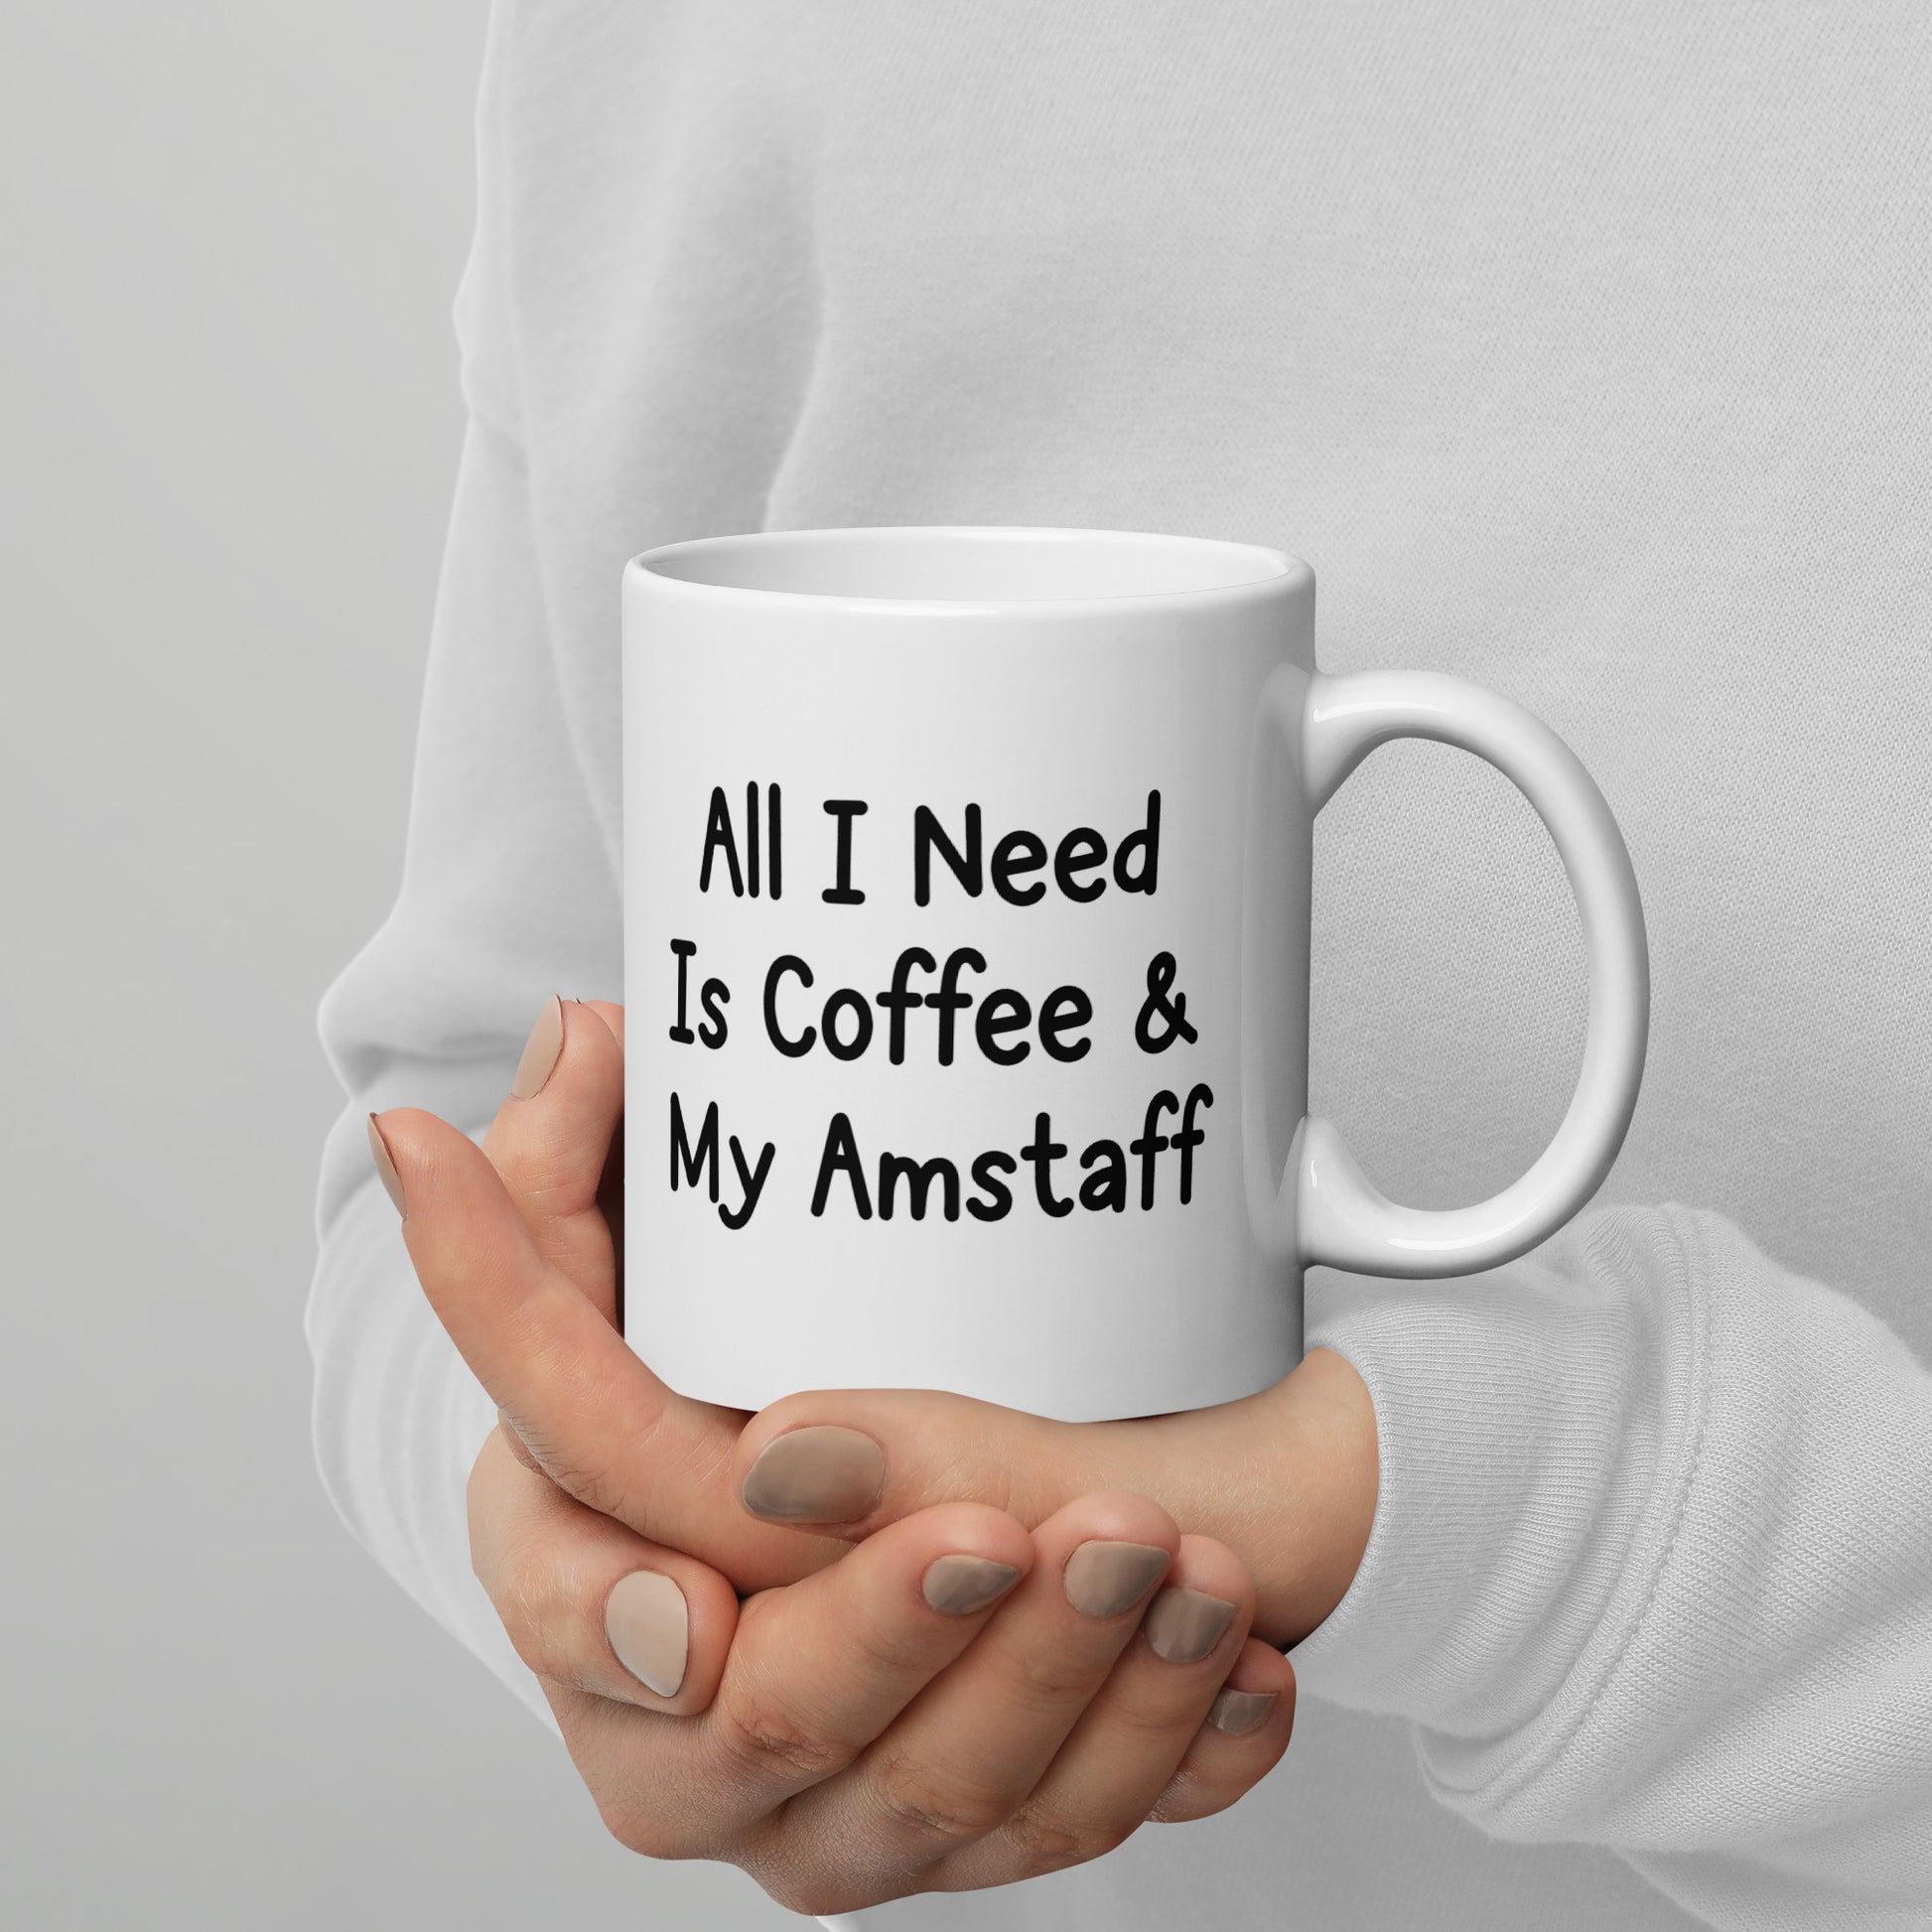 All I need is coffee & my Amstaff mug by Dog Artistry.